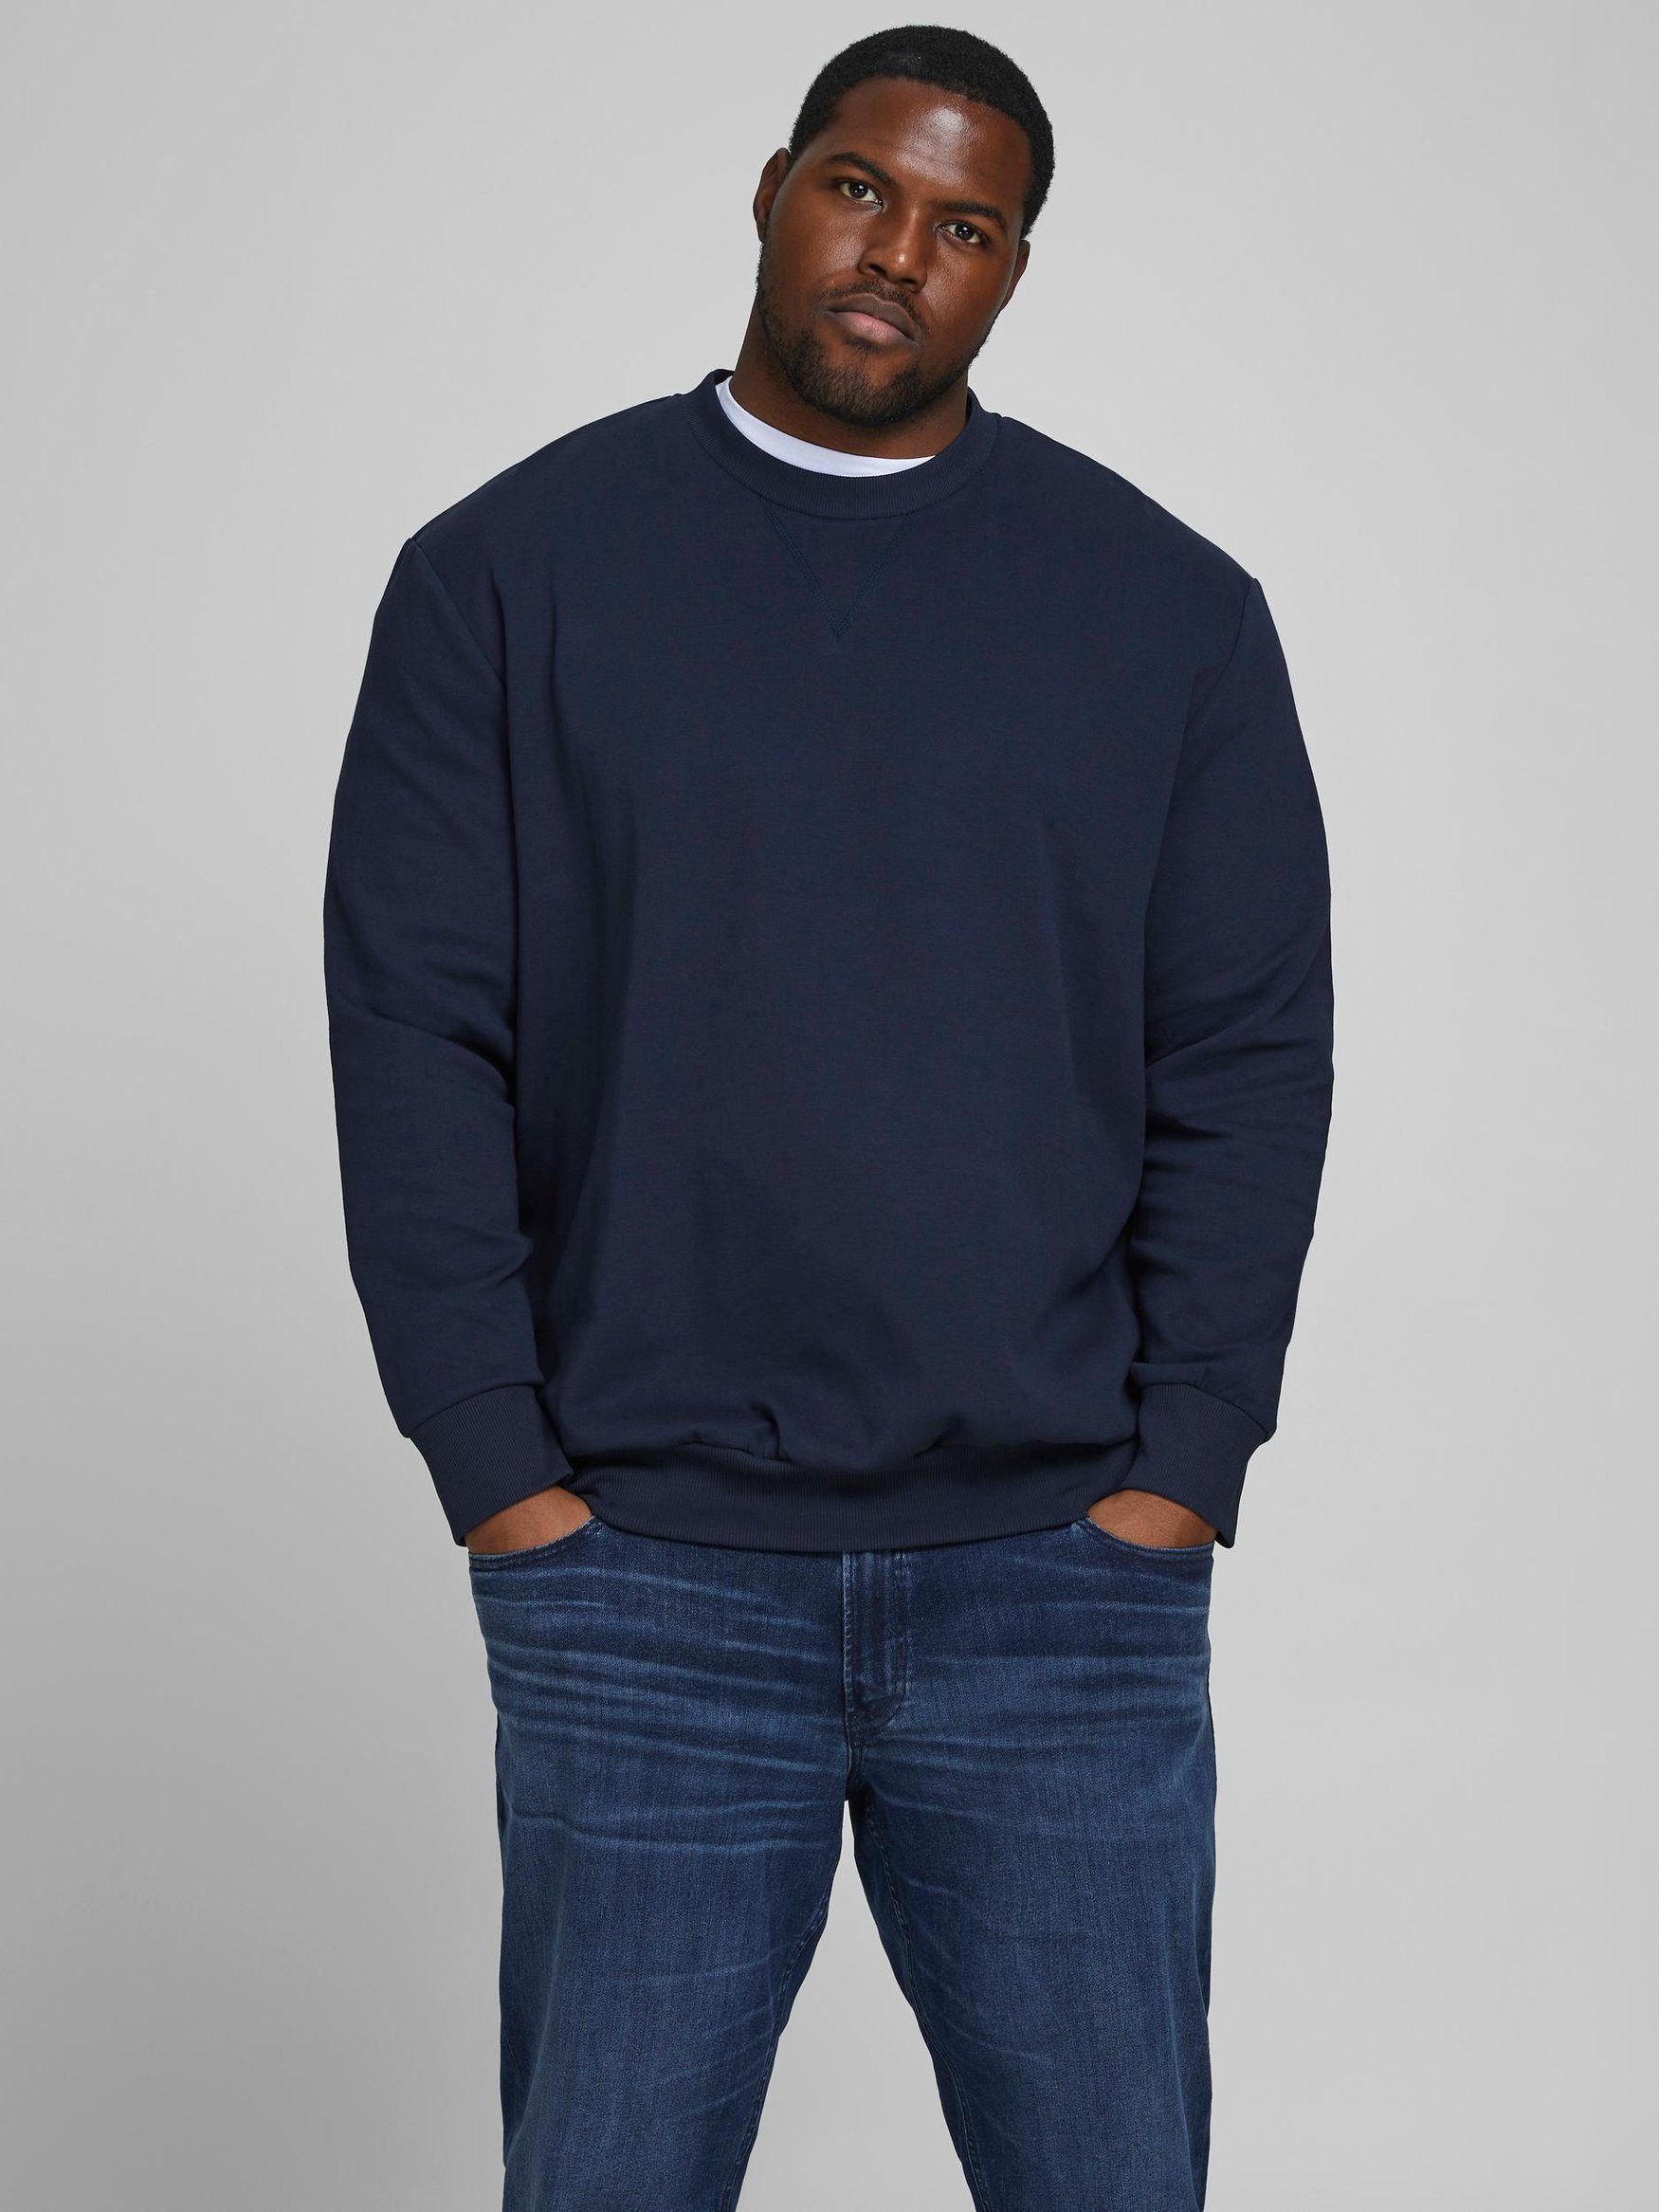 Jack & Jones Sweatshirt Basic Sweater Plus Size Sweatshirt Pullover Übergröße JJEBASIC 4832 in Navy